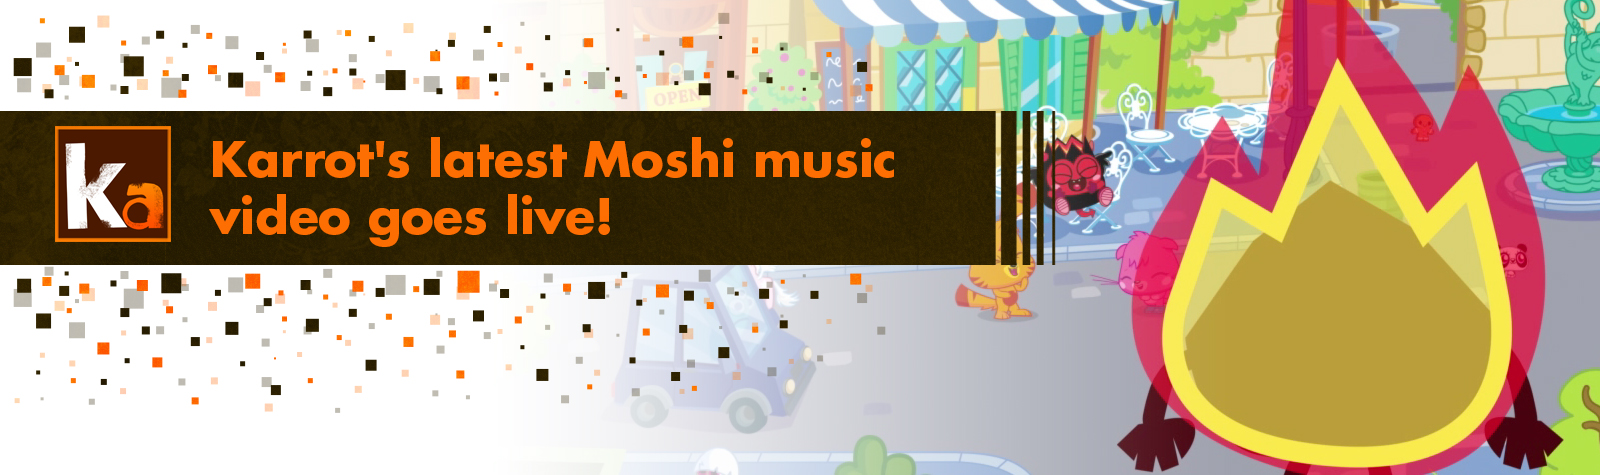 Karrot’s latest Moshi music video goes live!